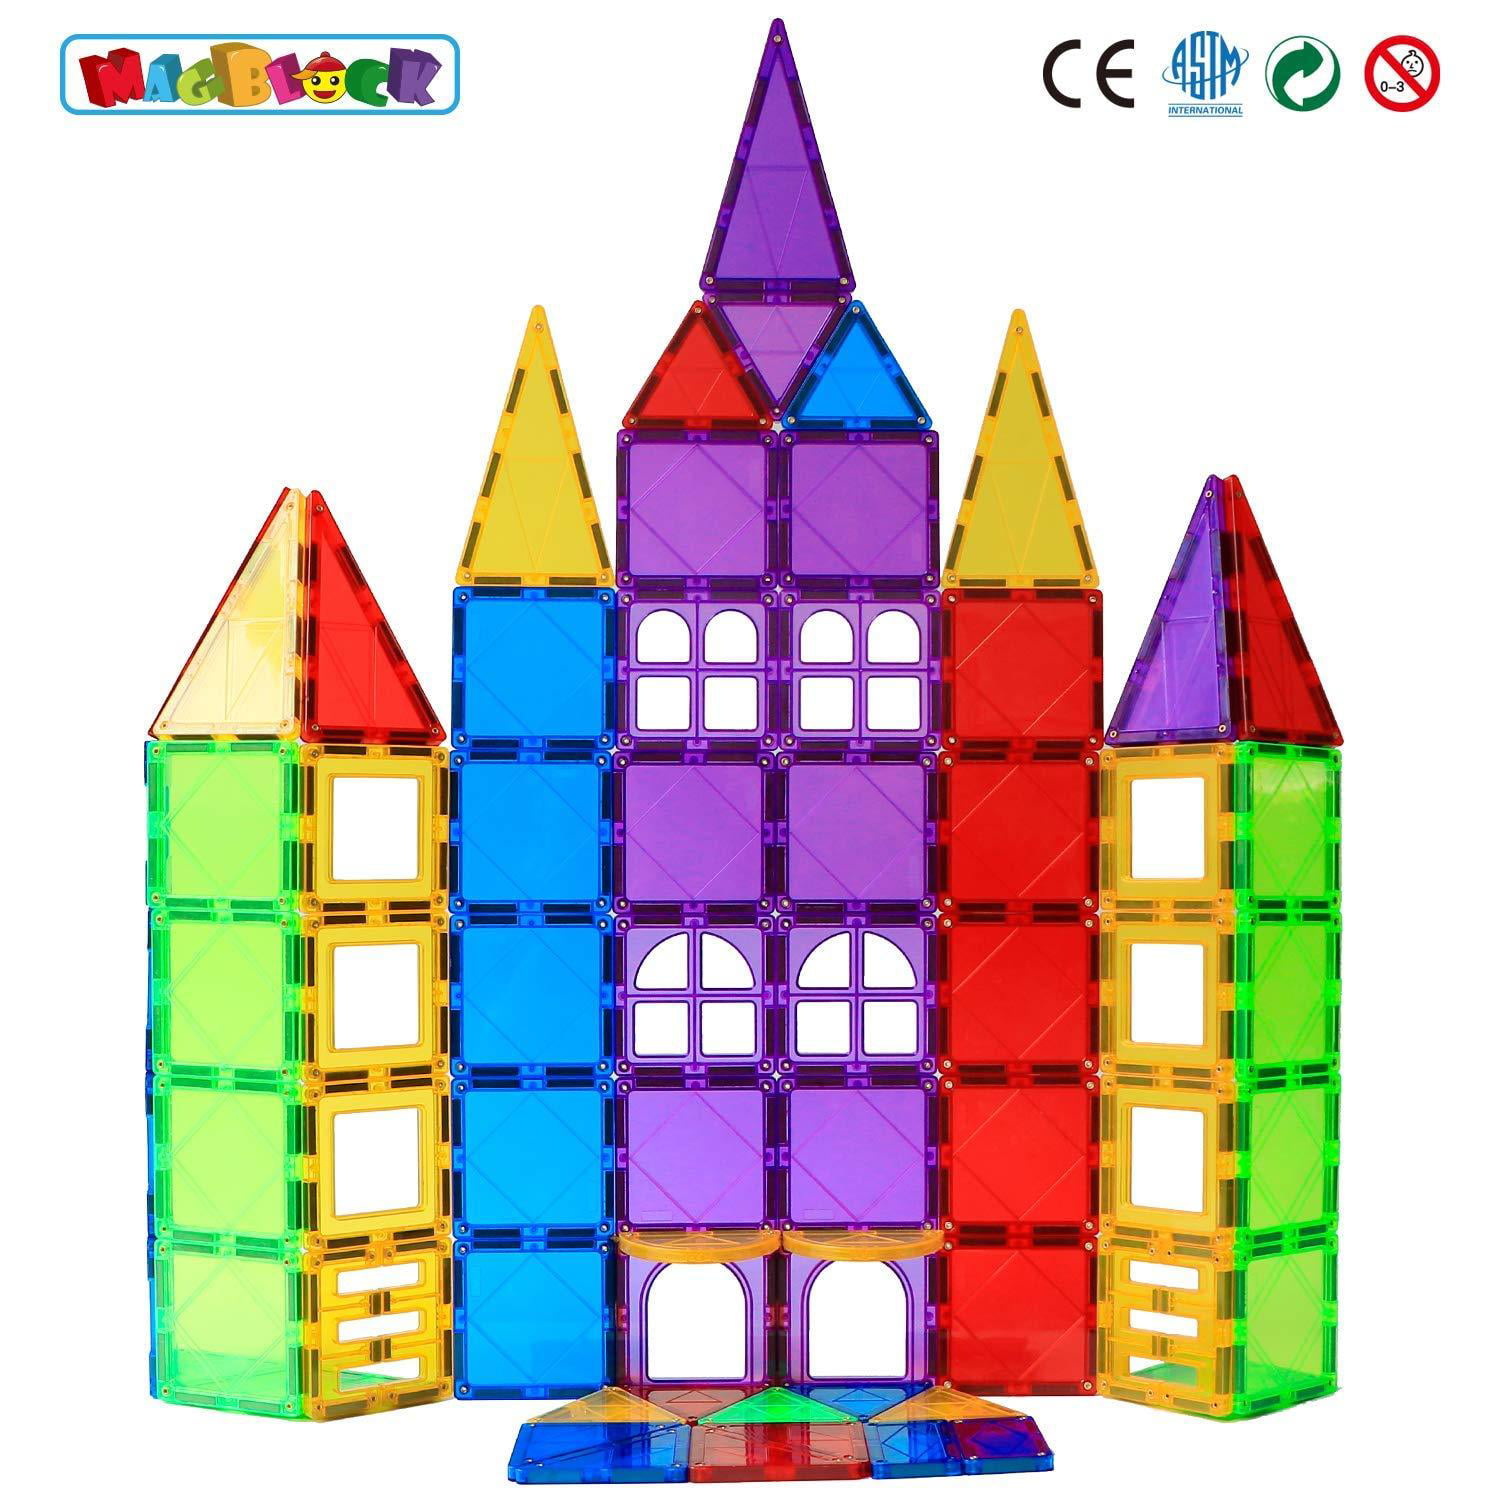 Magblock 66 PCS Magnetic Building Blocks, Magnetic Tiles for Kids 